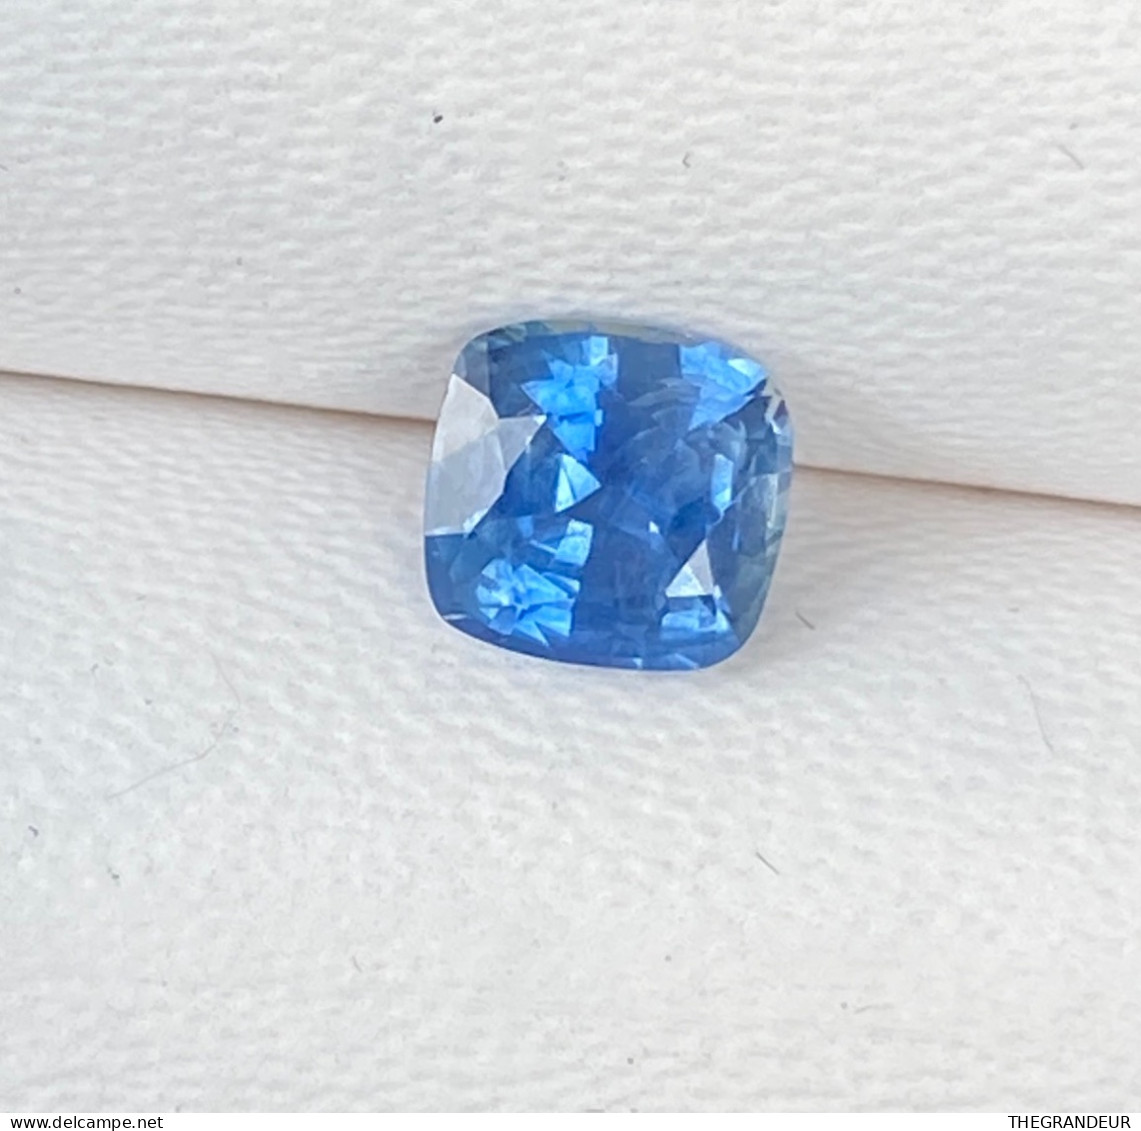 Blue Sapphire Heated Stone 1.43 Carat Cushion Square Loose gemstone from Sri Lanka